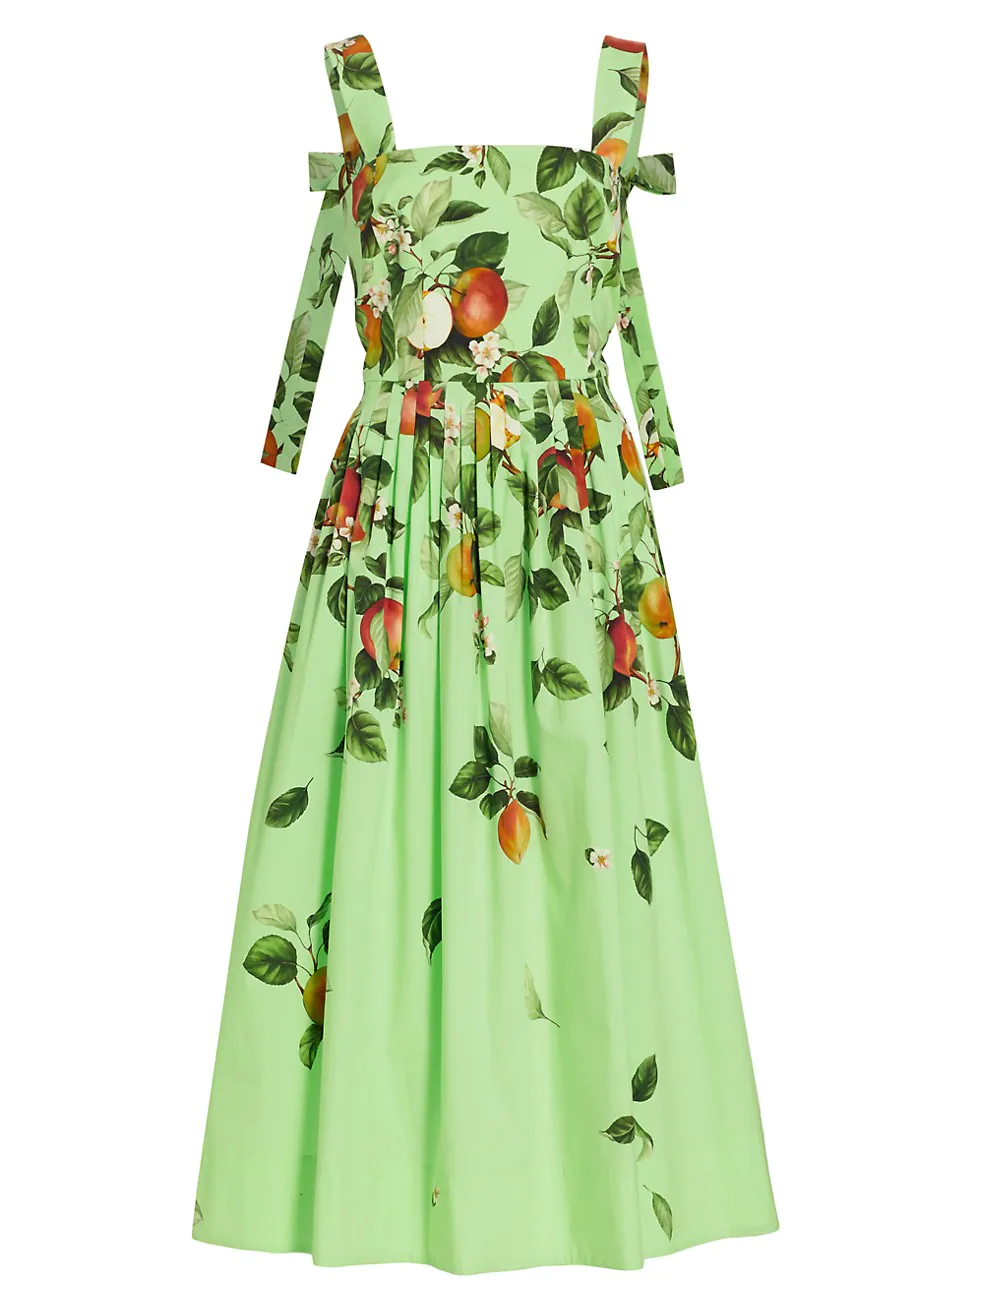 Oscar de la Renta - Saks Fifth Avenue - summer dresses - summer fashion - fashion